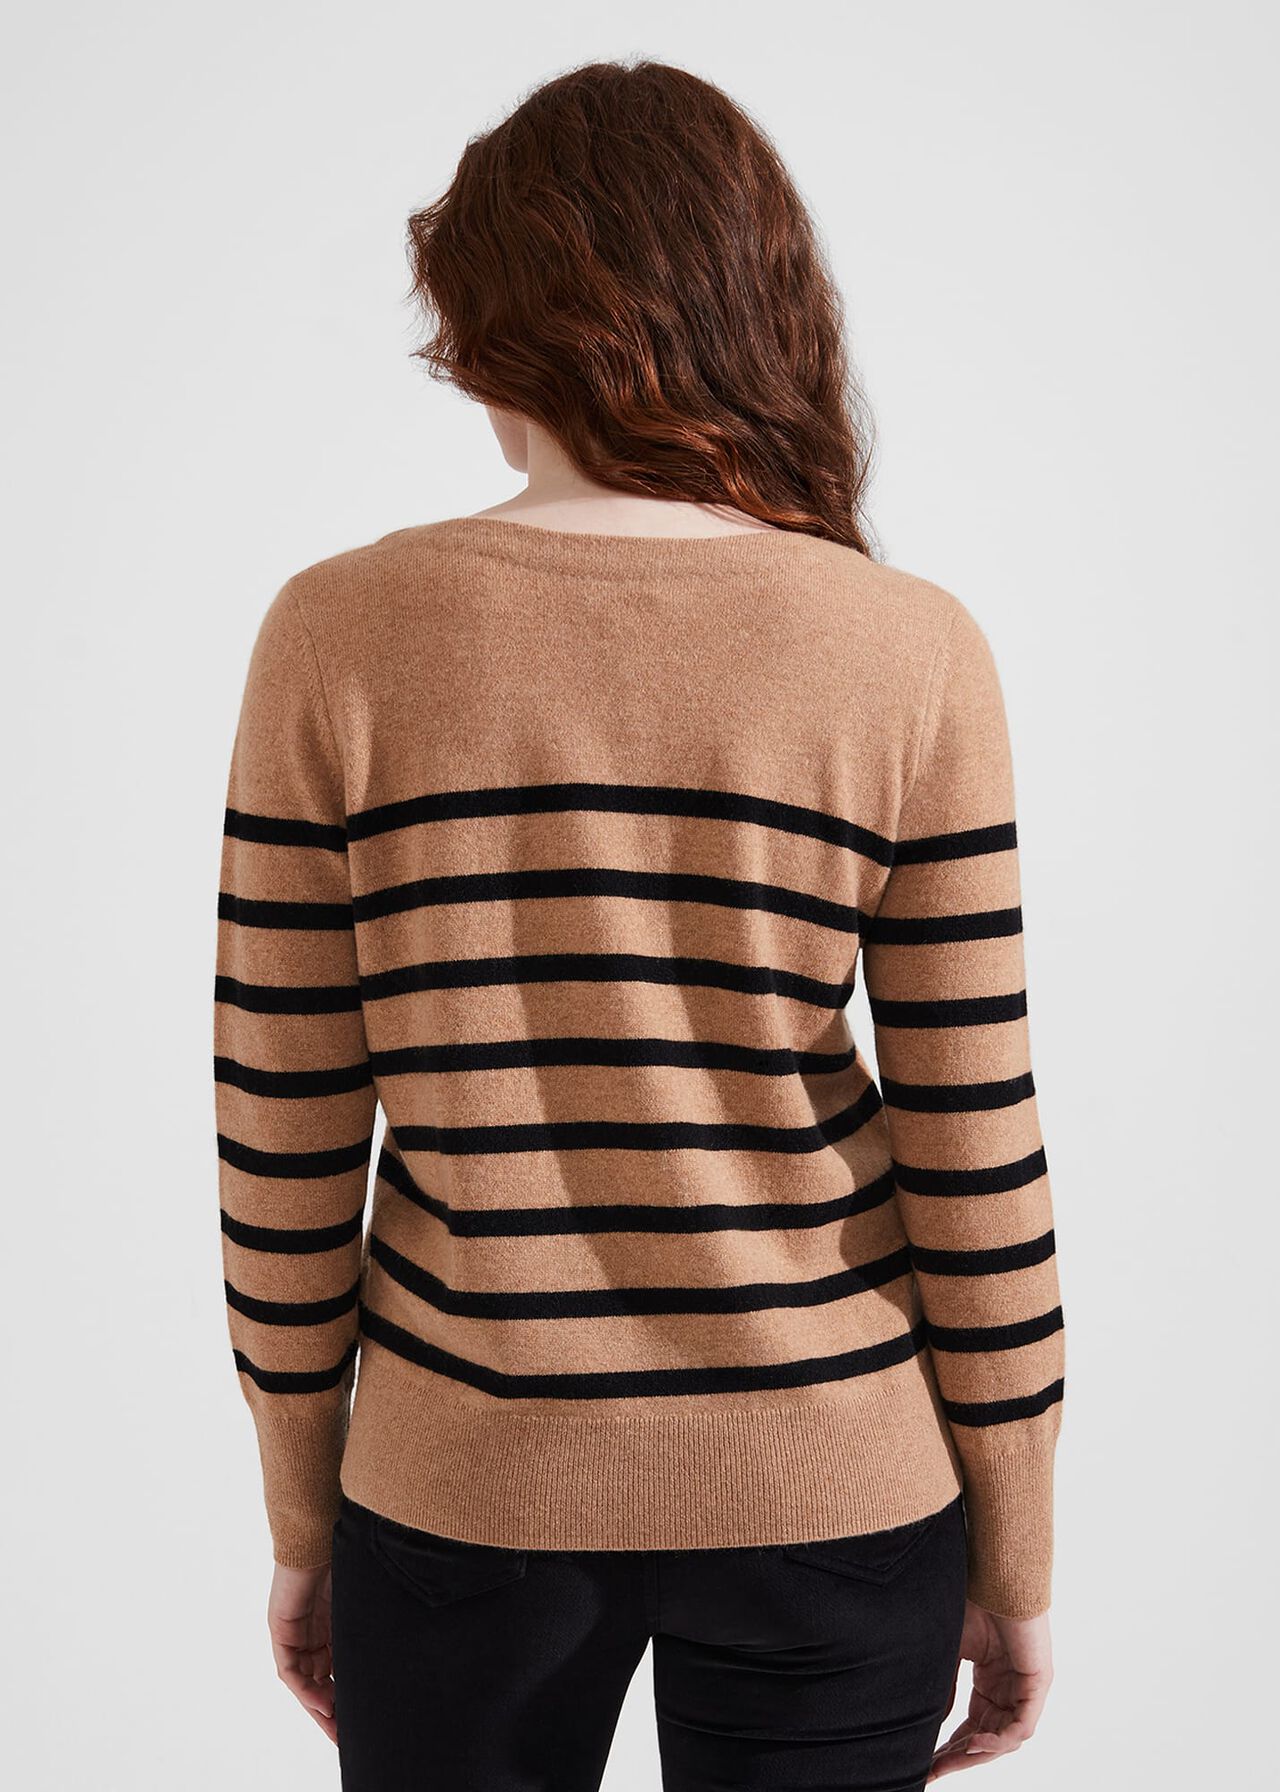 Larina Cashmere Stripe Sweater, Camel Black, hi-res